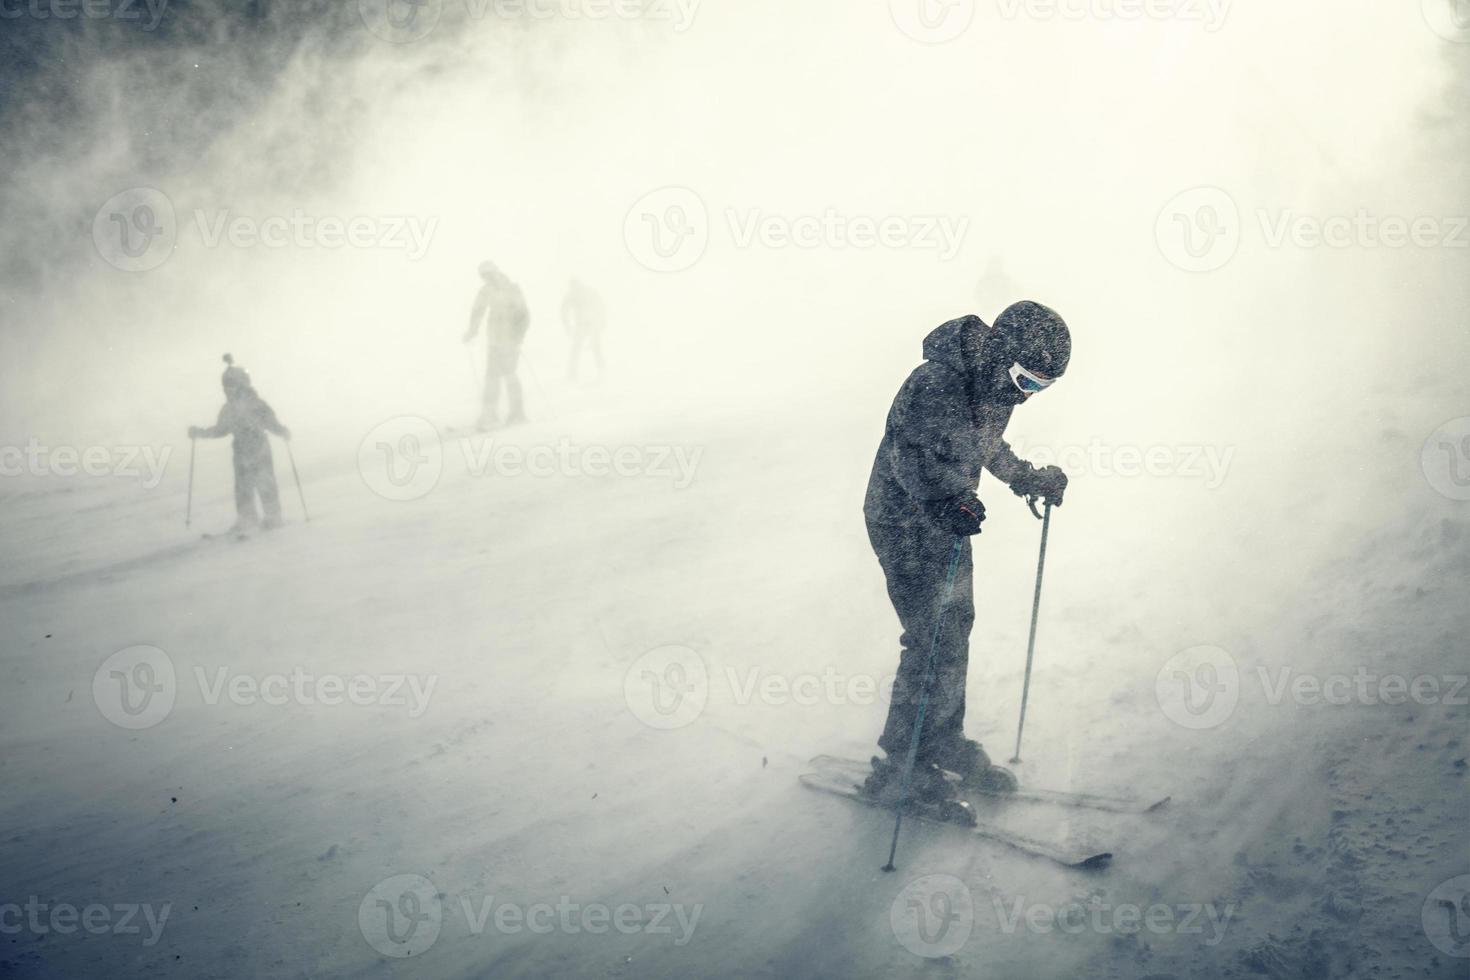 Snowboarder in snow photo